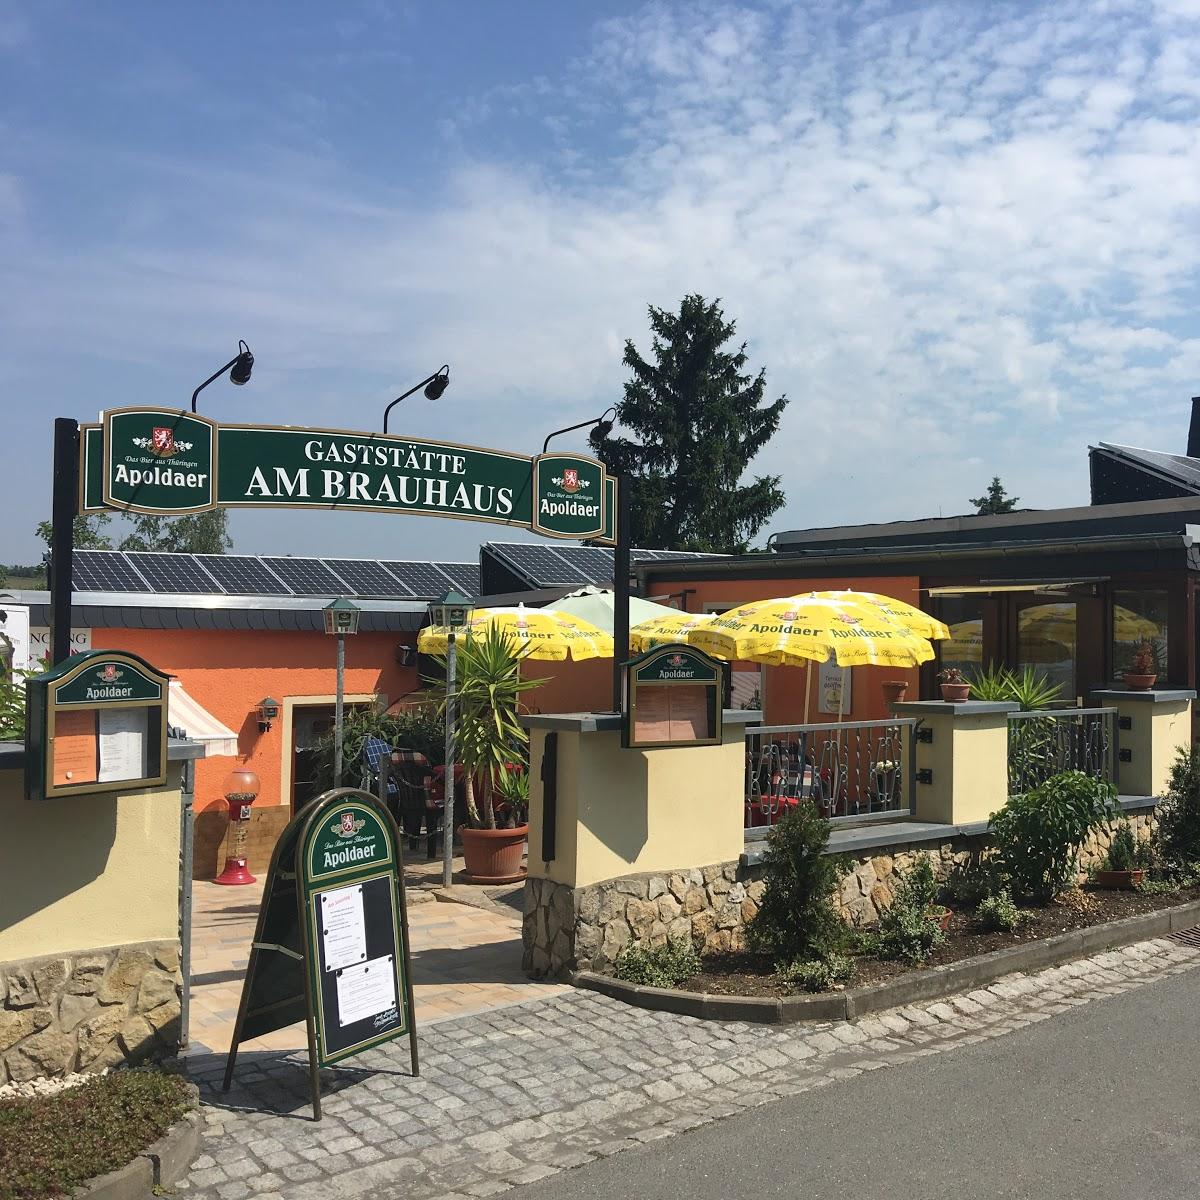 Restaurant "Gaststätte & Pension Hartmut Veit" in Camburg